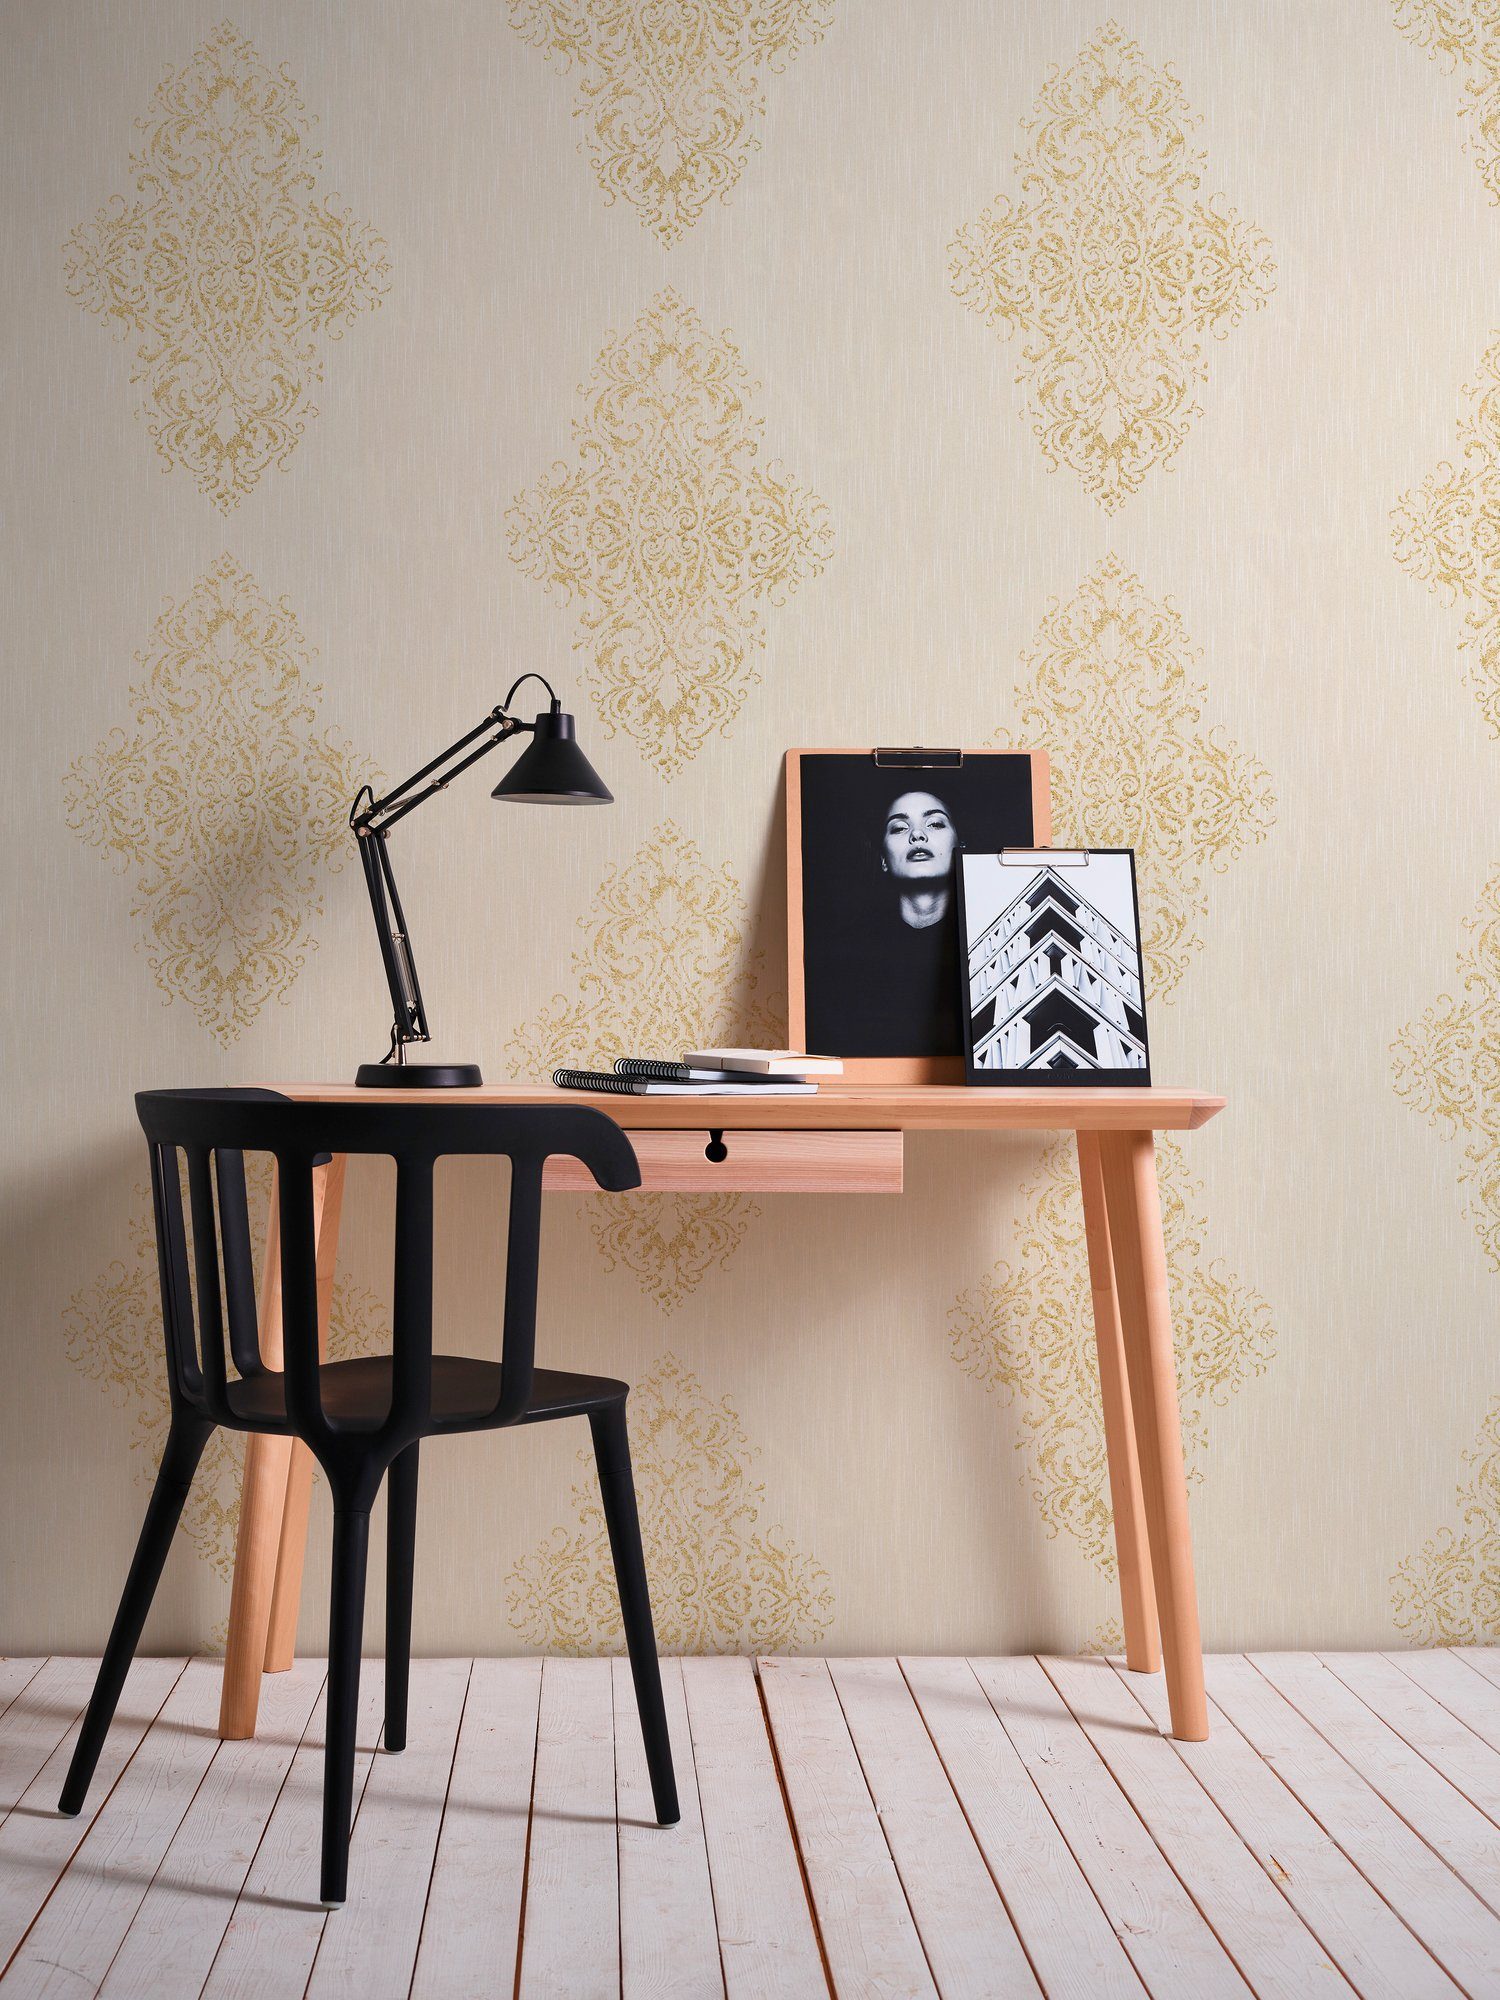 Metallic Textiltapete A.S. Effekt samtig, Luxury Paper Barock, creme/gold Architects wallpaper, Barock Tapete Création Textil